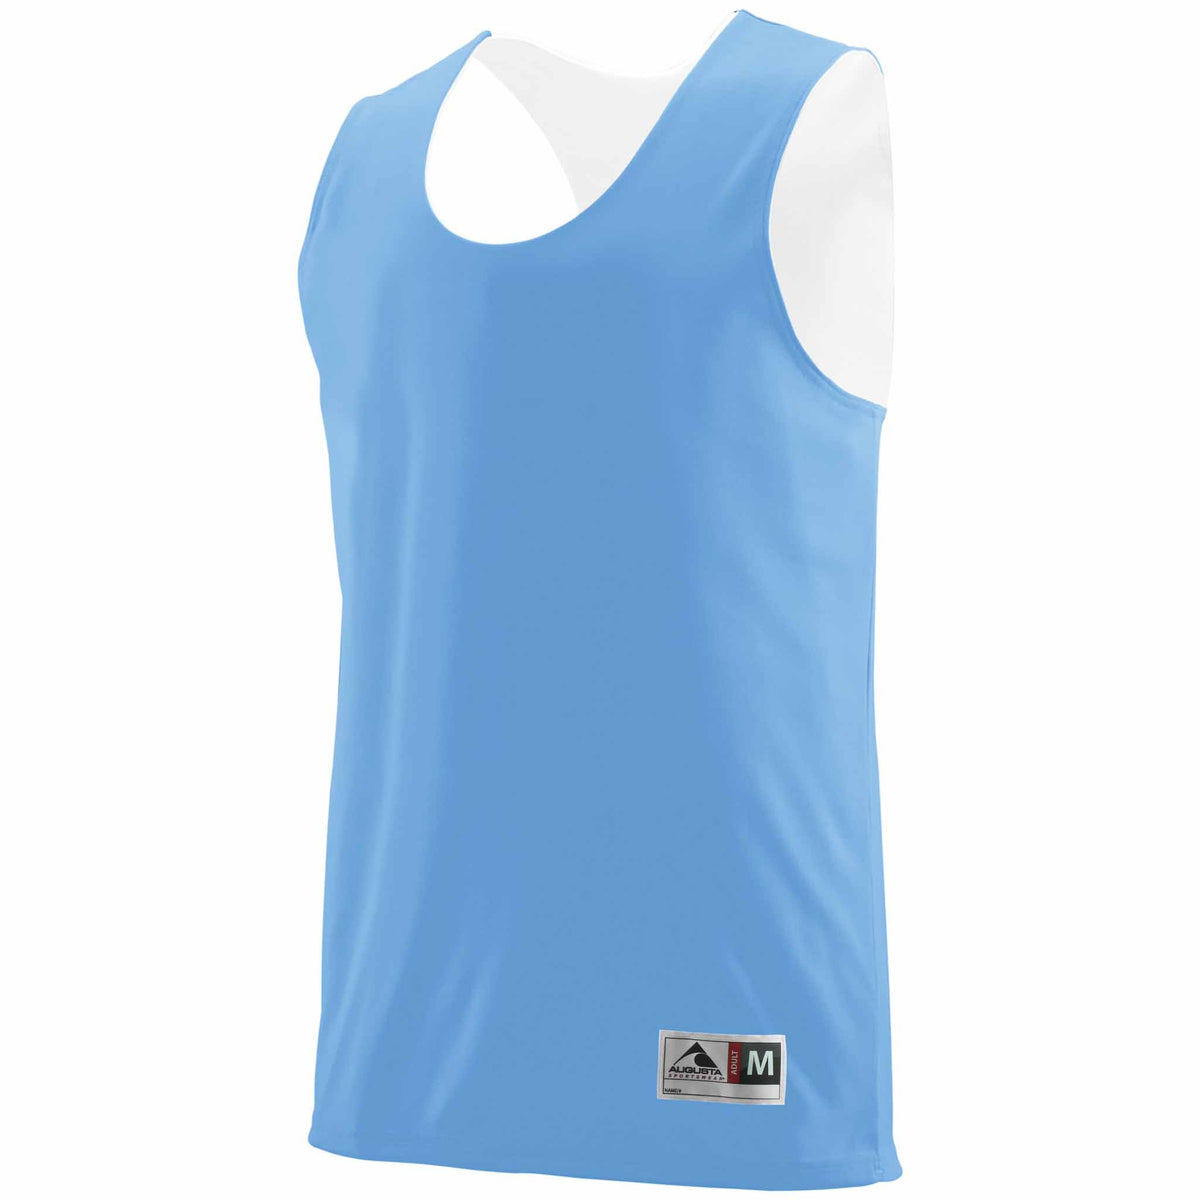 Augusta Sportswear camisole de basketball réversible - Bleu Ciel / Blanc